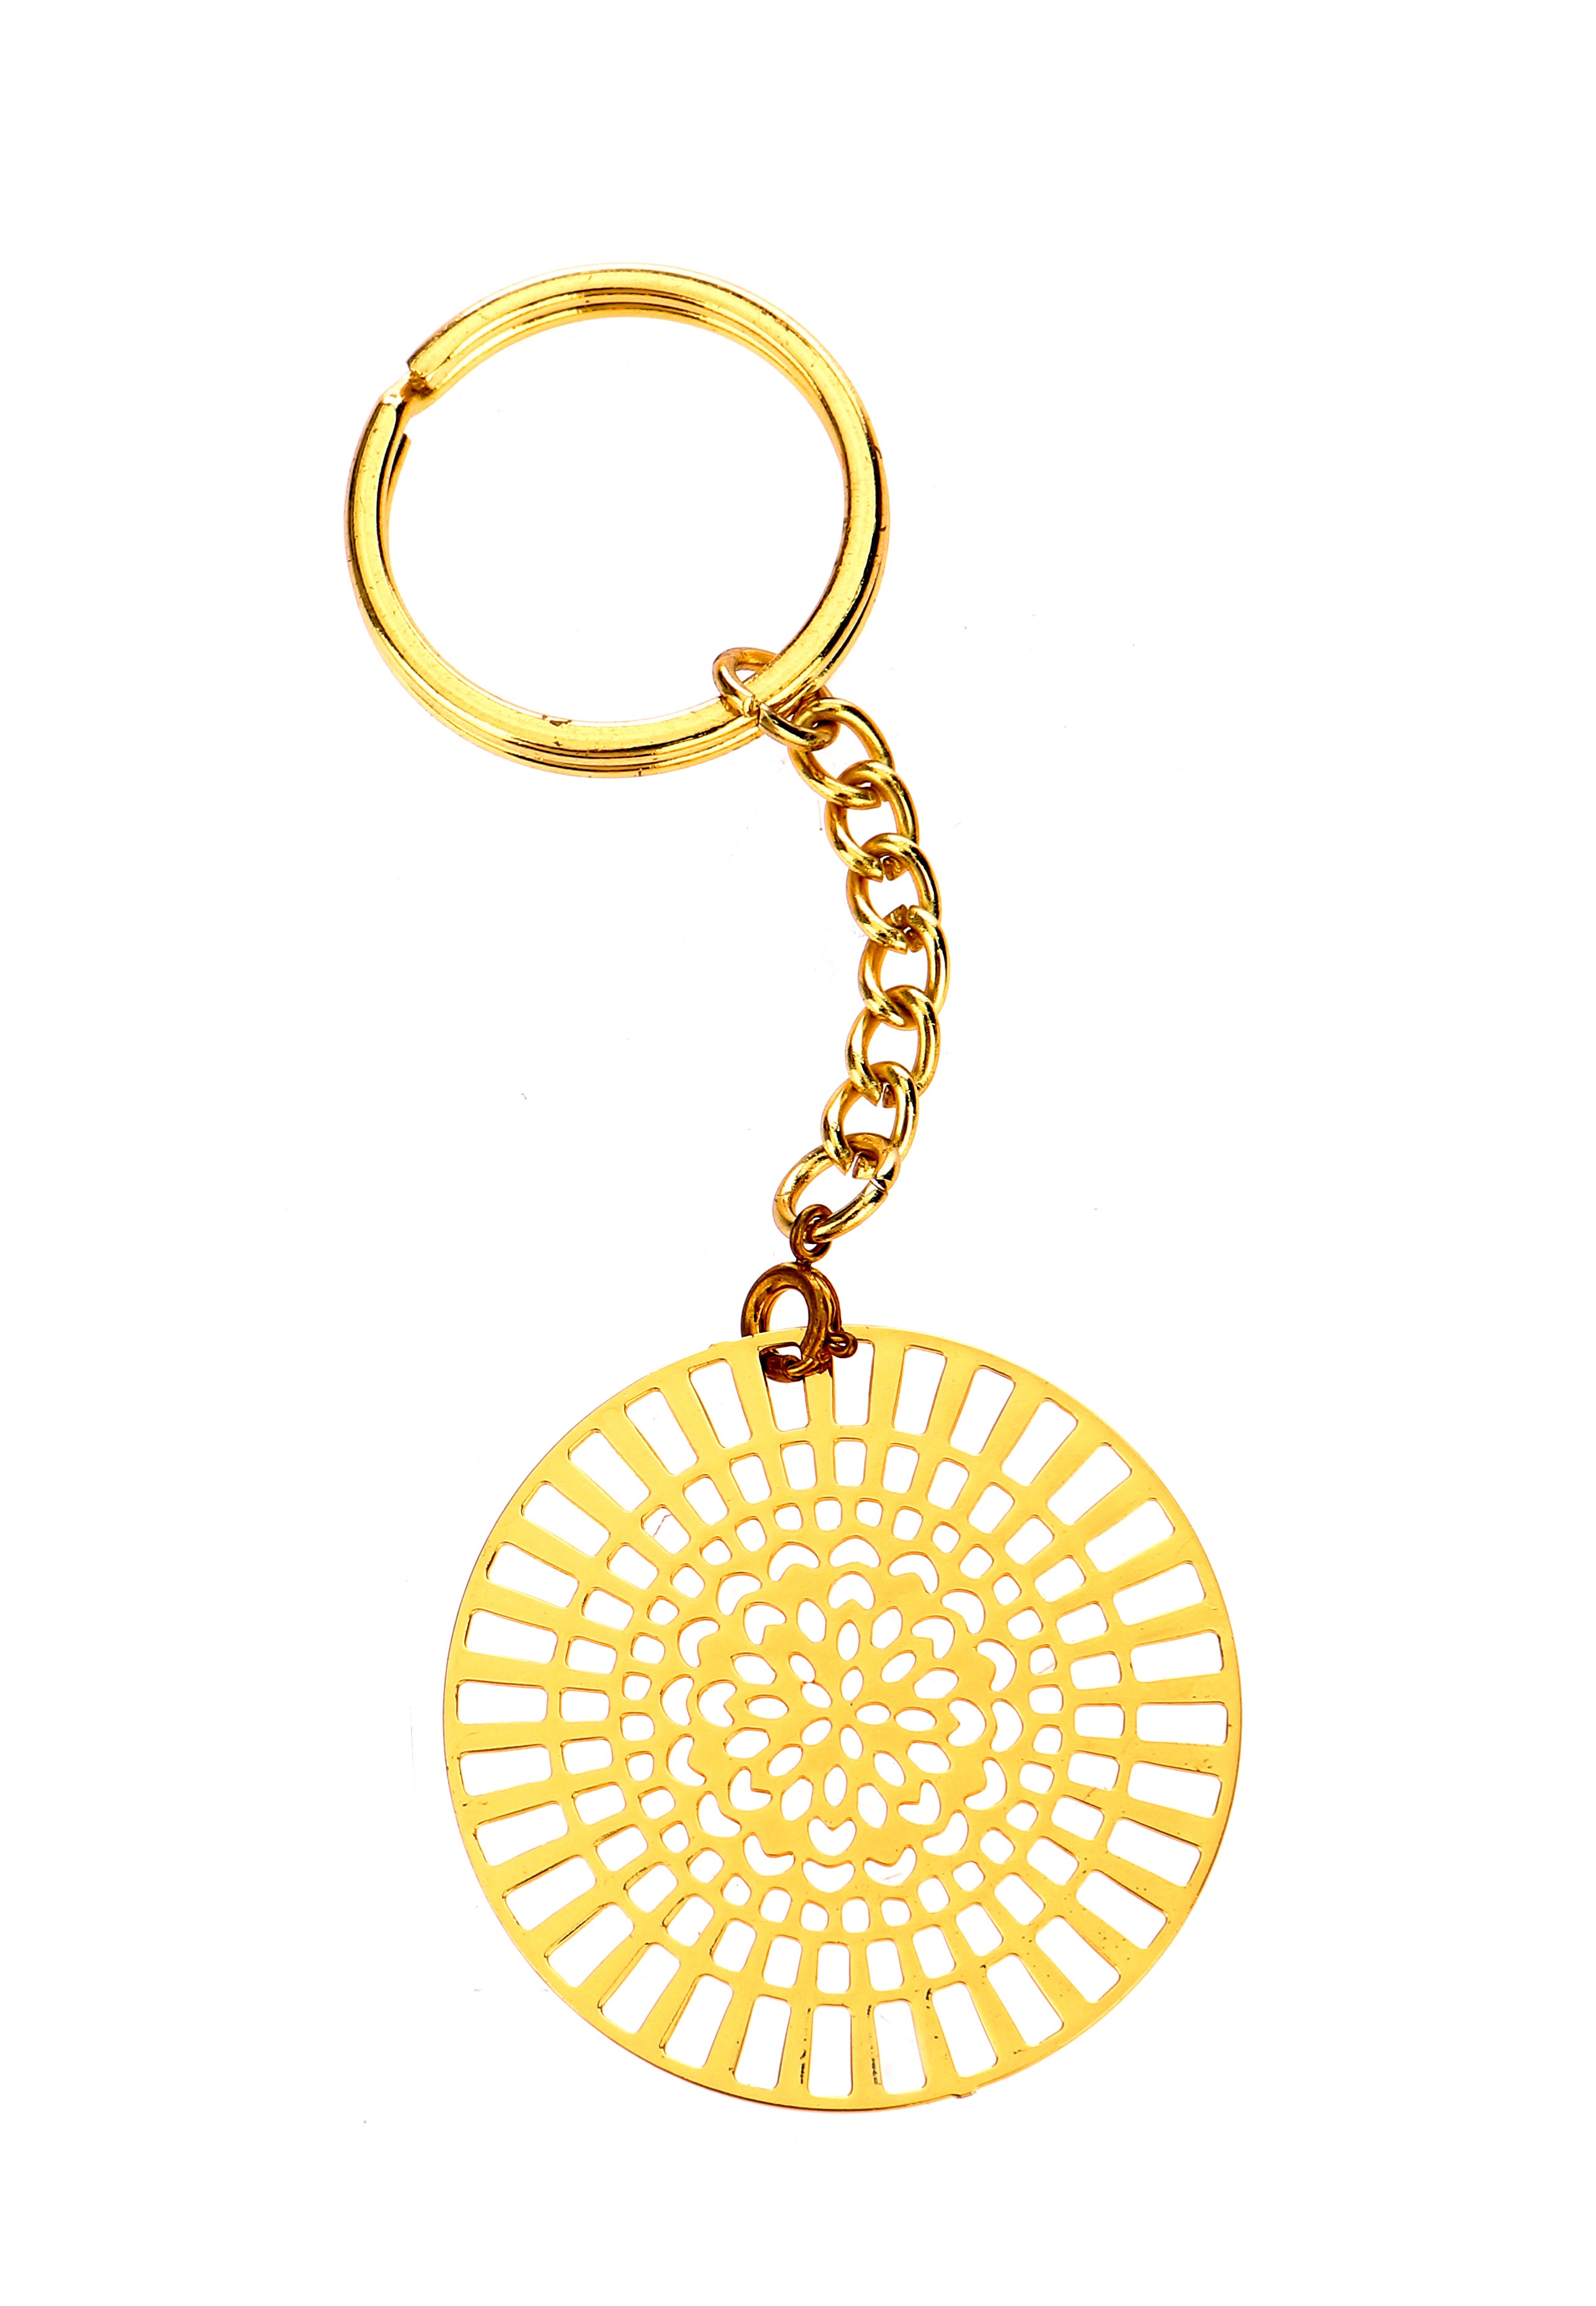 Dial Design Brass Key Chain Ring in Golden Finish